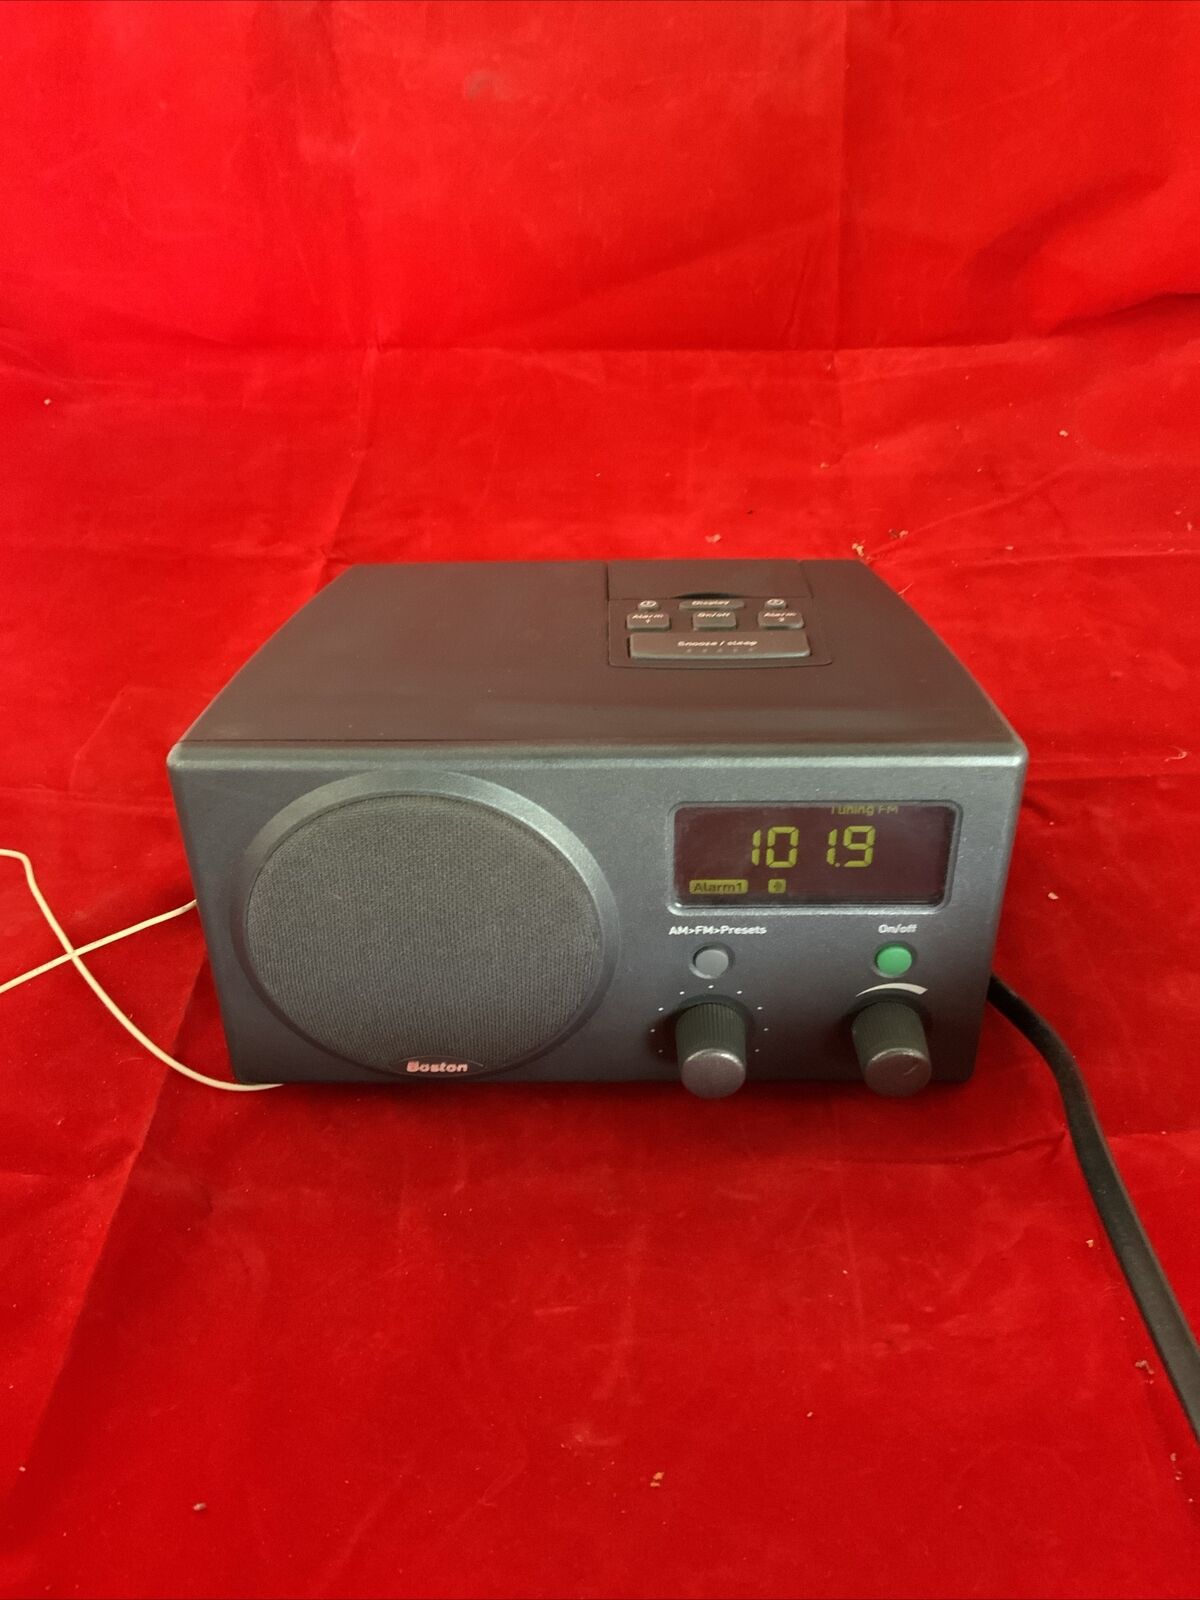 Boston Acoustics Recepter Radio AM FM Dual Alarm Clock Radio Black Tested Great